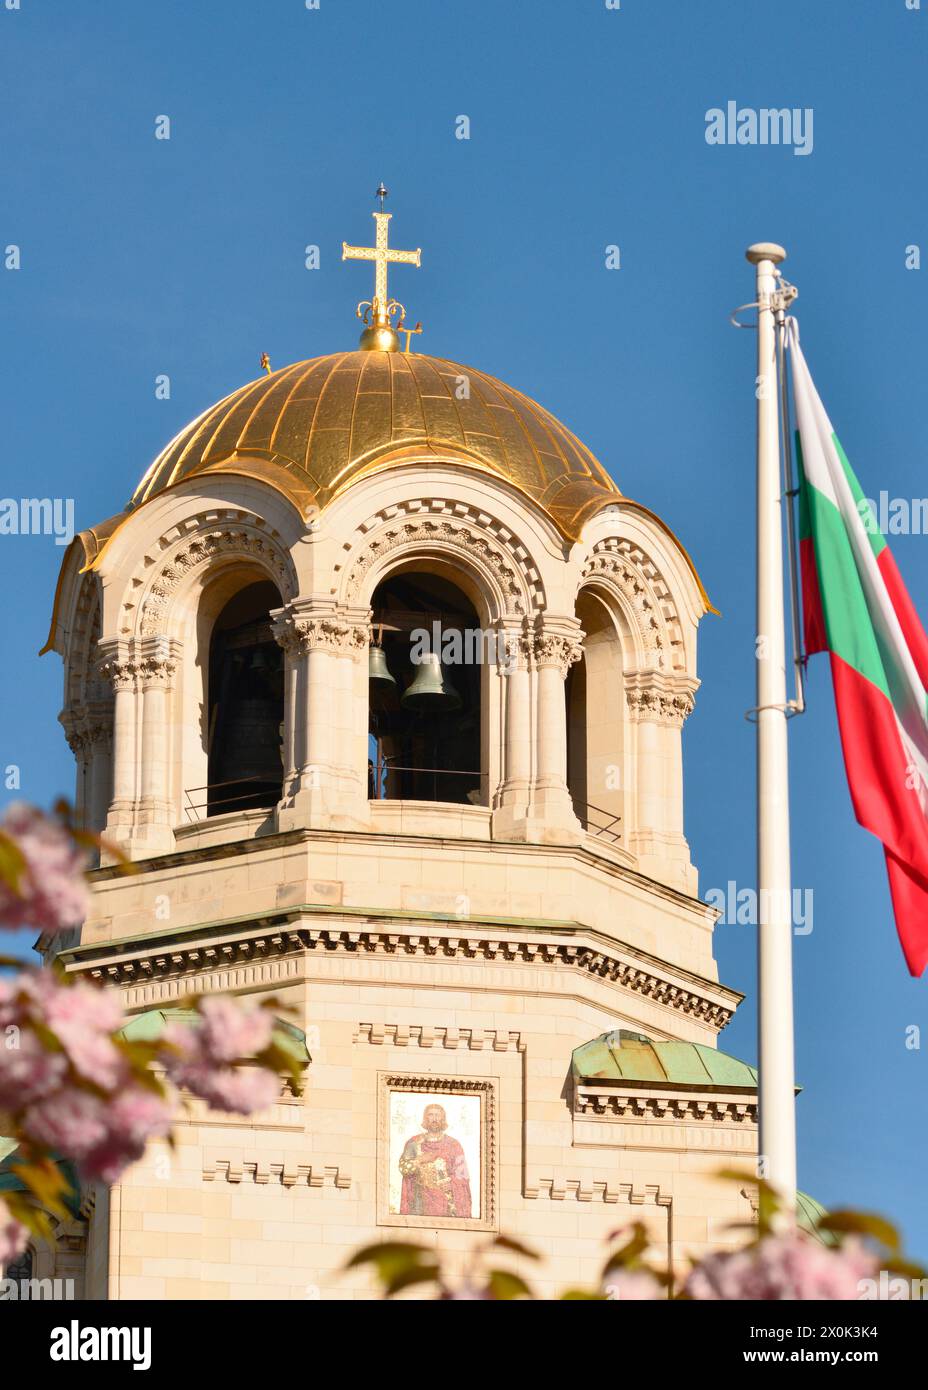 St. Goldene Kuppel der Alexander-Newski-Kathedrale und bulgarische Nationalflagge in Sofia Bulgarien; Osteuropa, Balkan, EU-Kopierraum Stockfoto